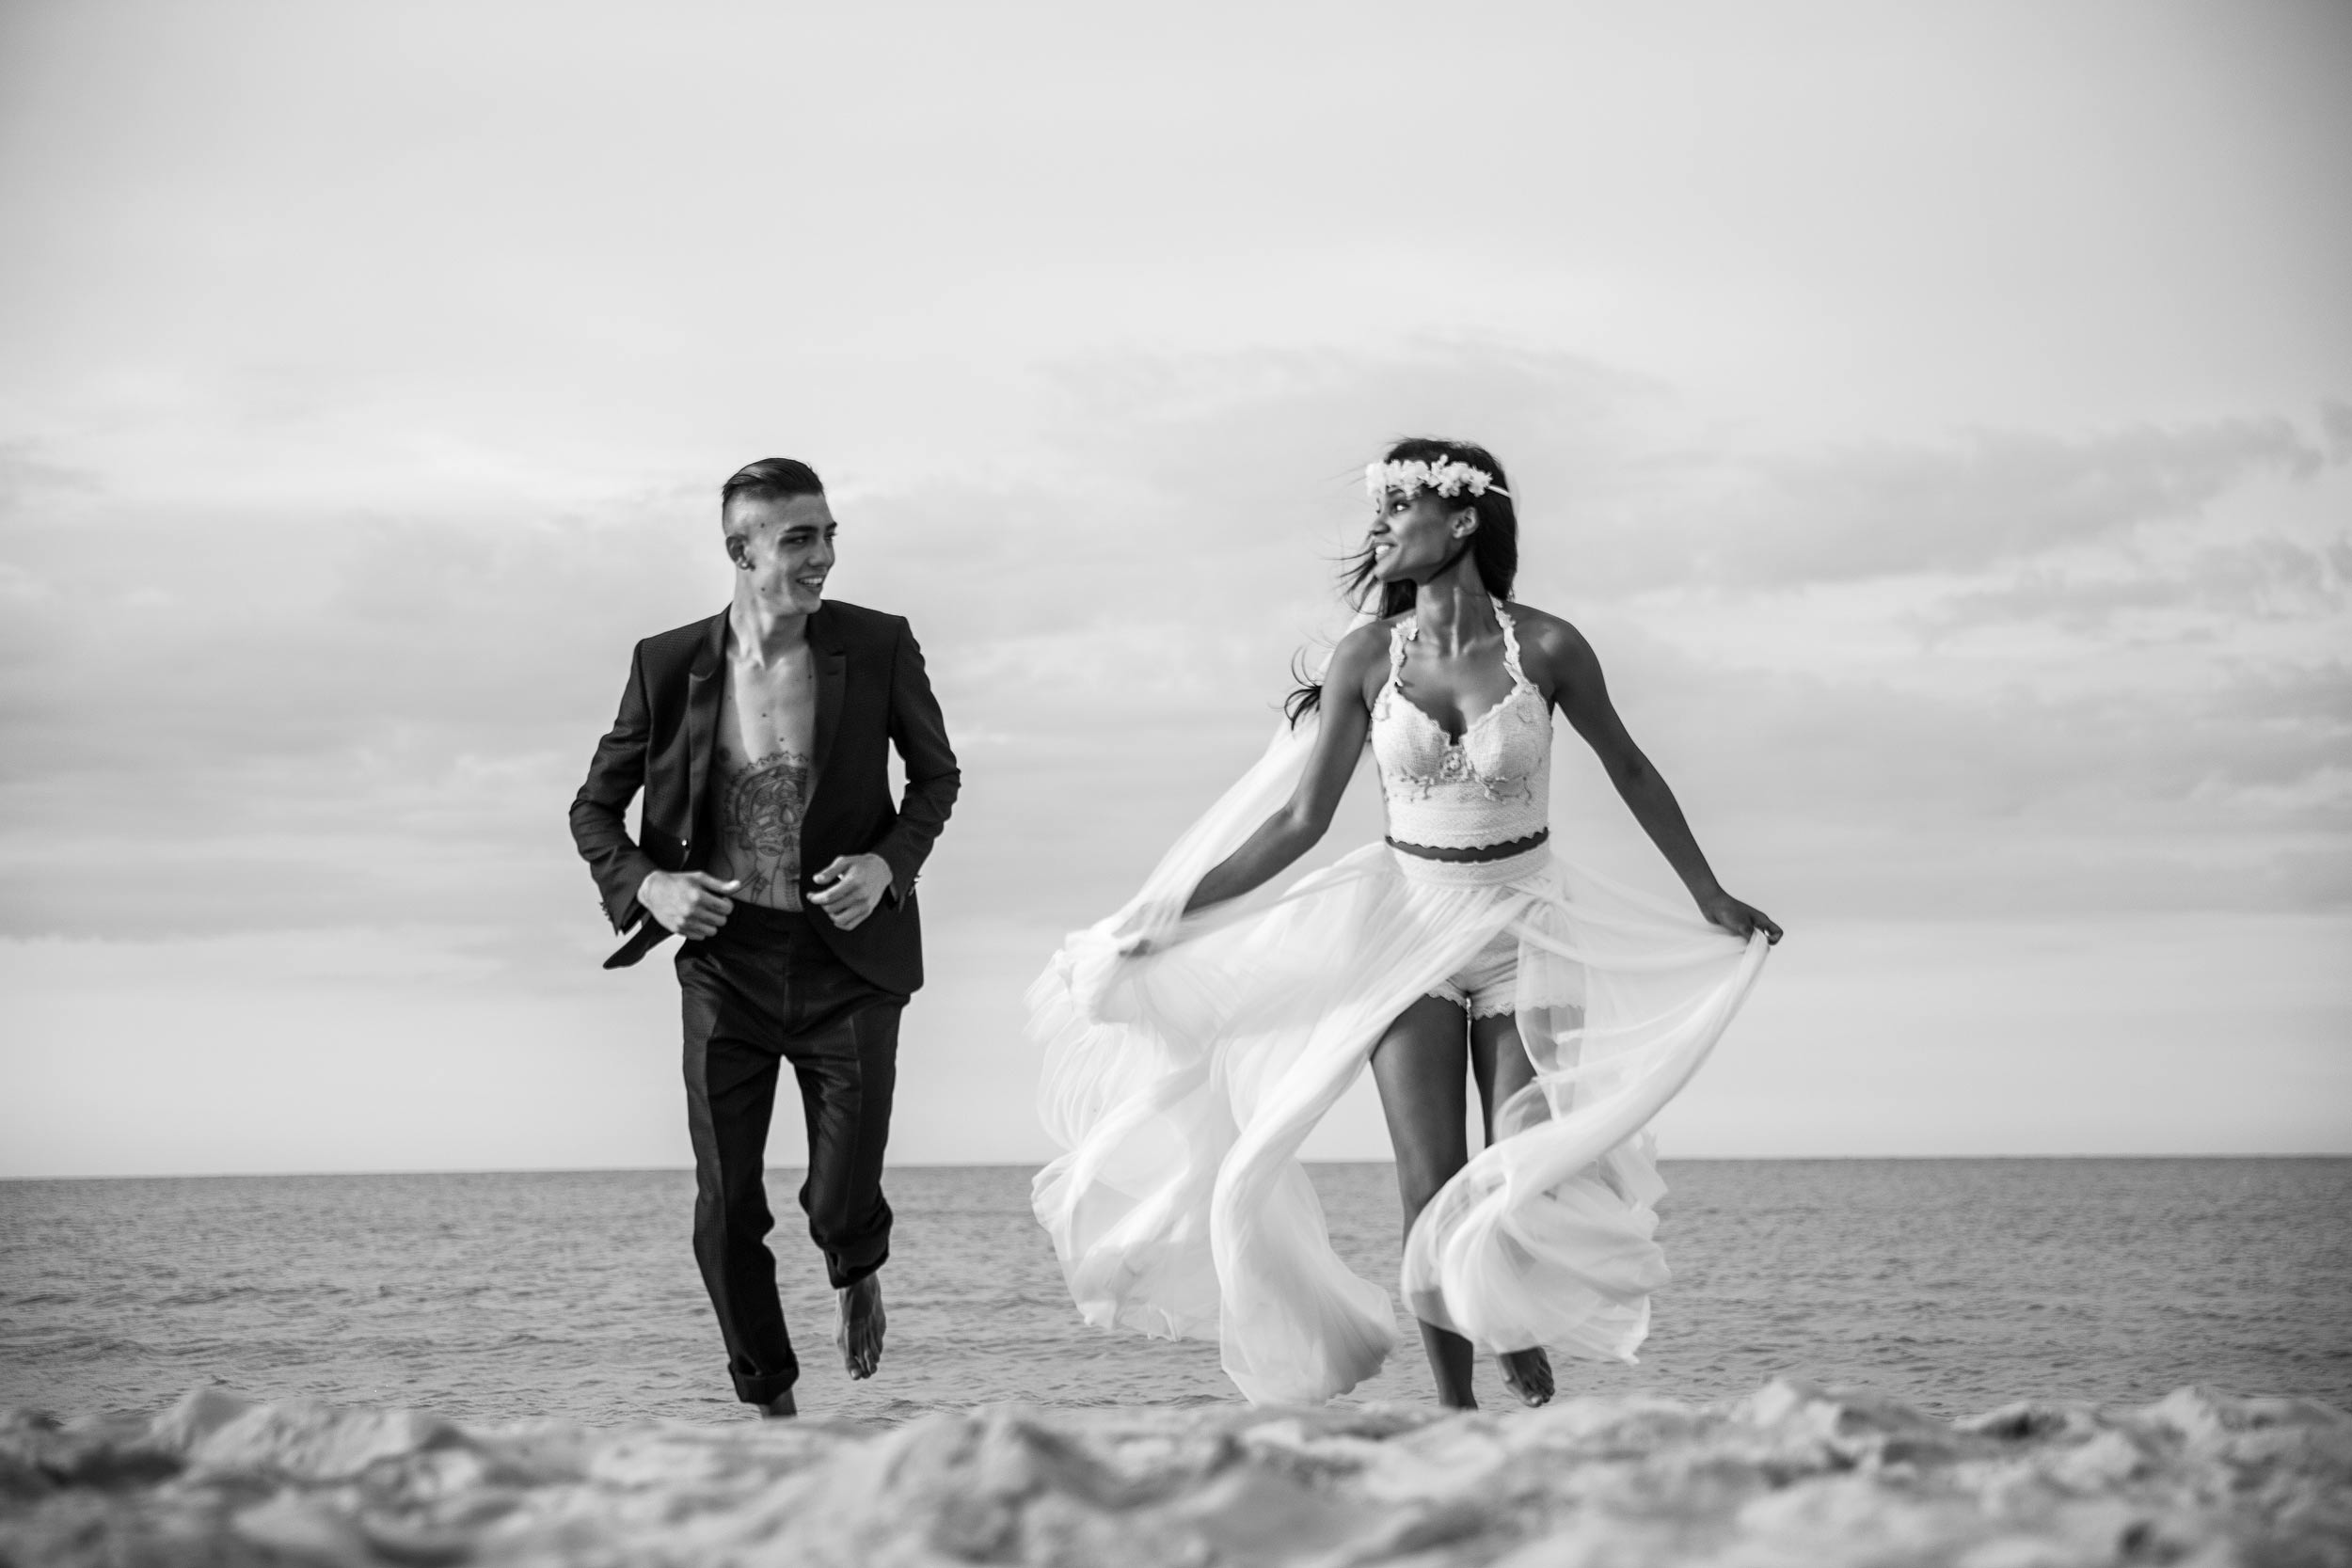 Brautpaar Strand Italien Lachen sand meer horizont schwarzweiss